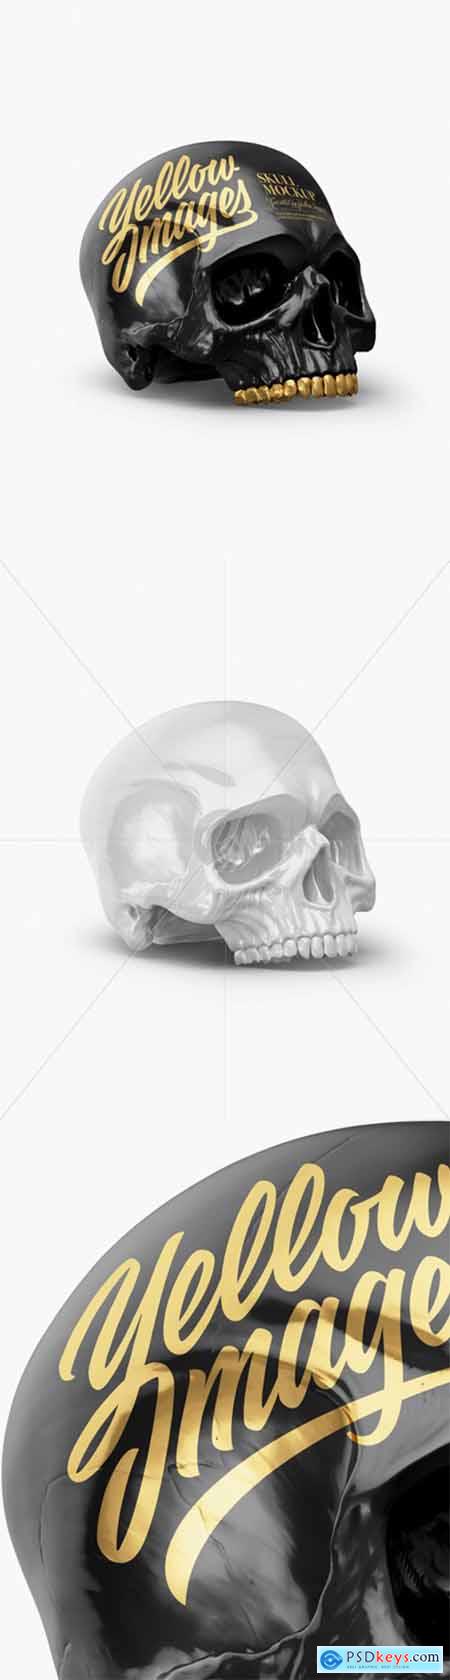 Skull Mockup - Half Side View 20853